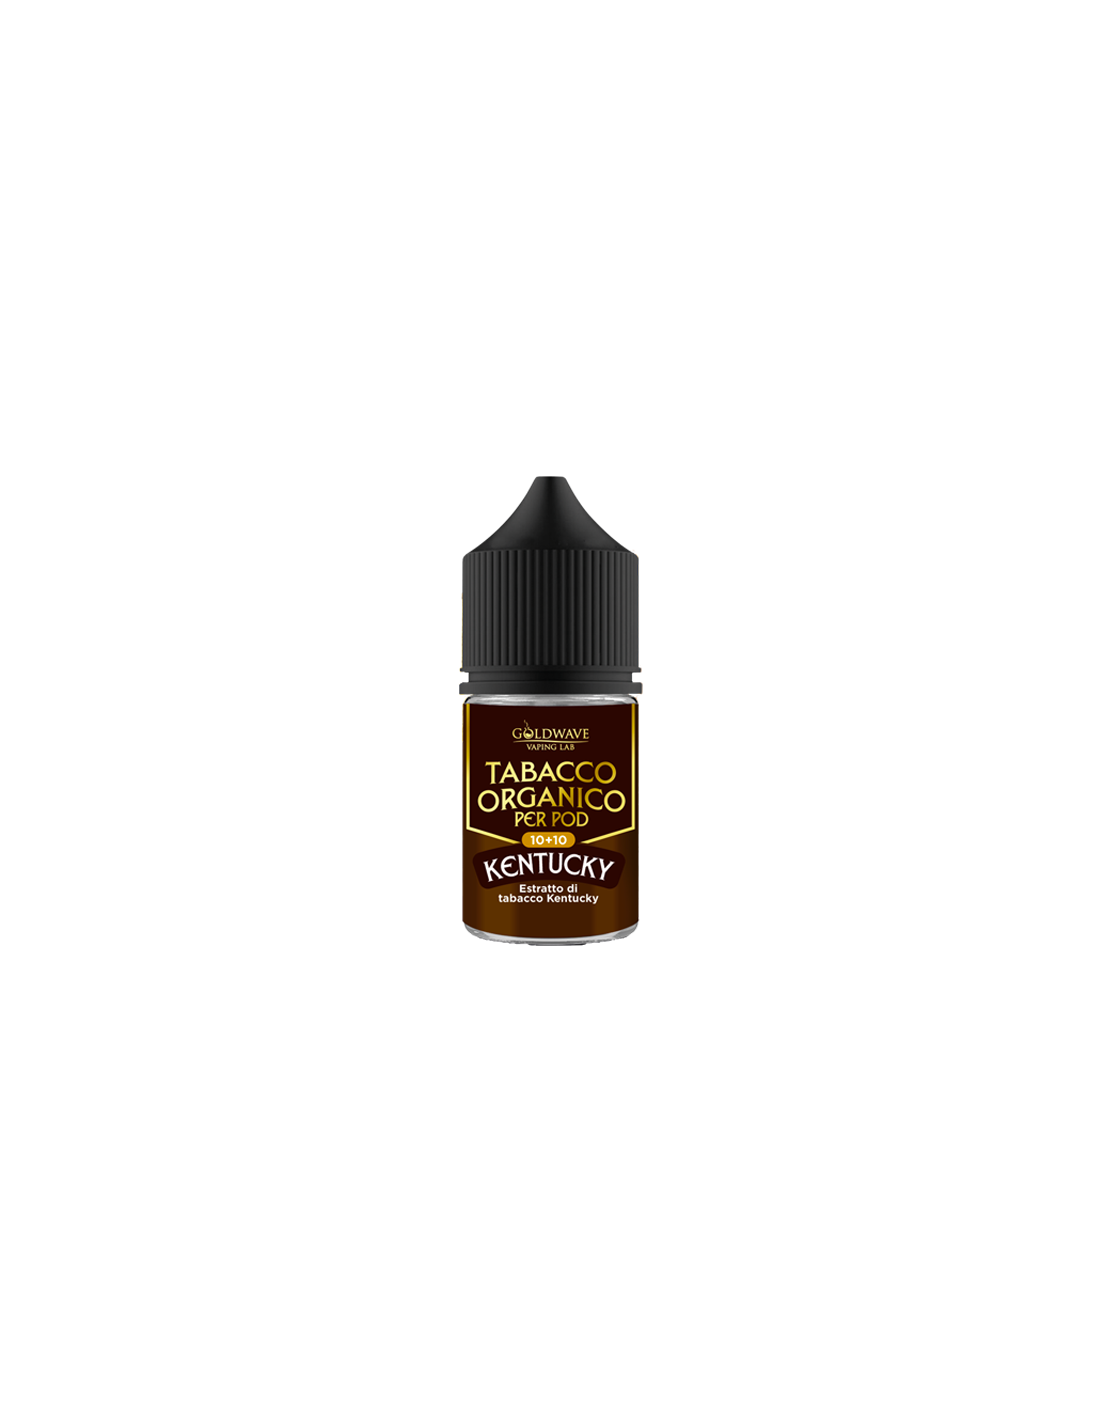 goldwave kentucky tabacco organico per pod aroma mini shot 10ml